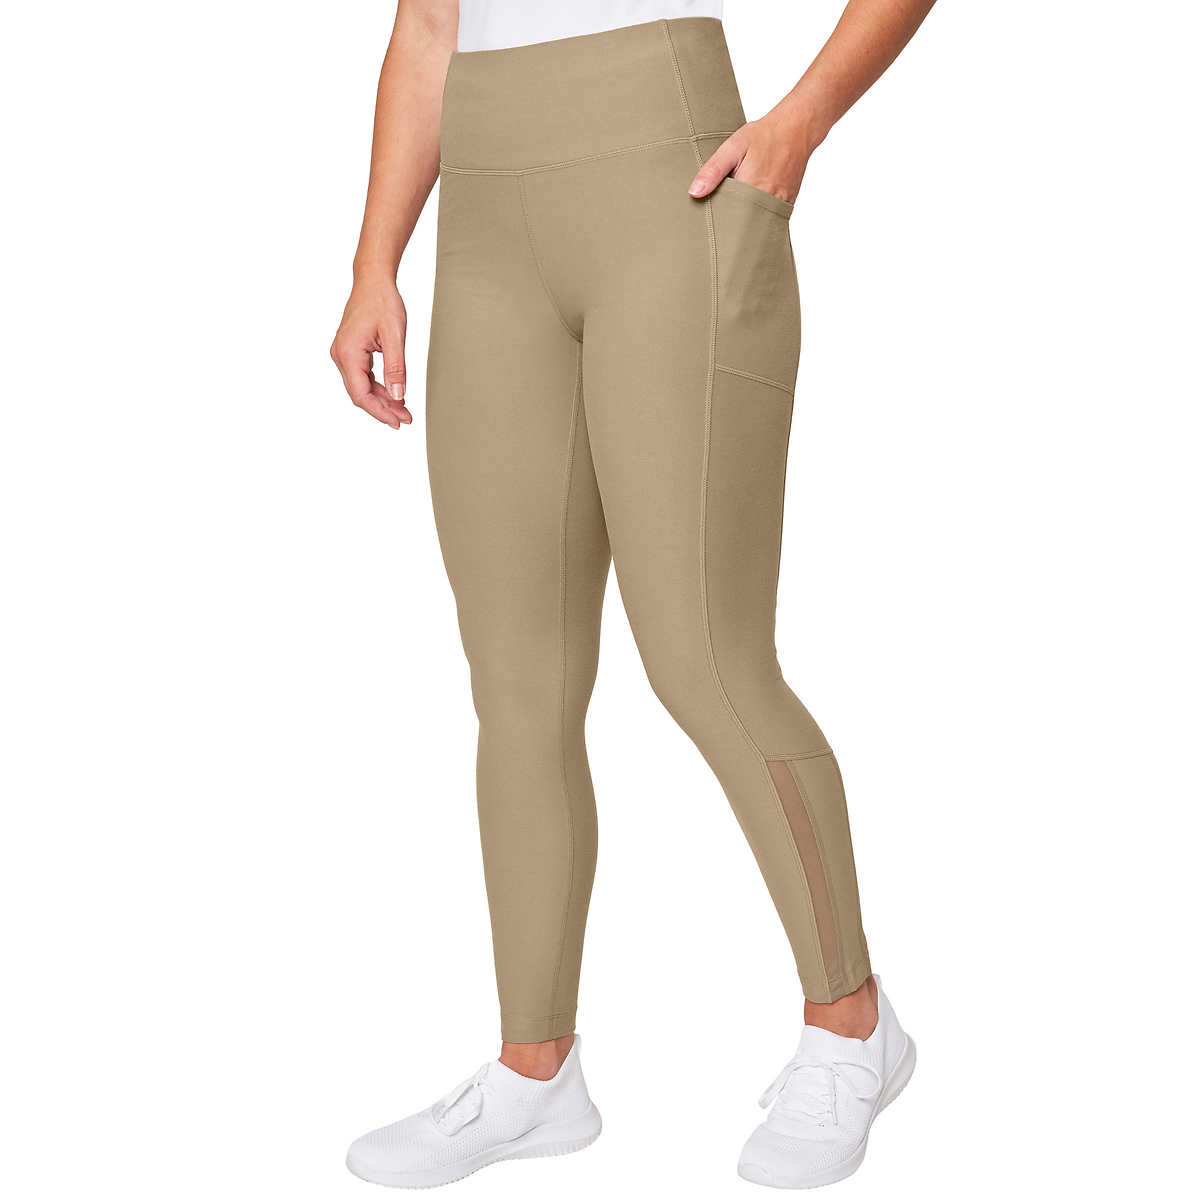  Women's 2PK French Laundry Sport Cellphone Pocket and Zip  Leggings Pants